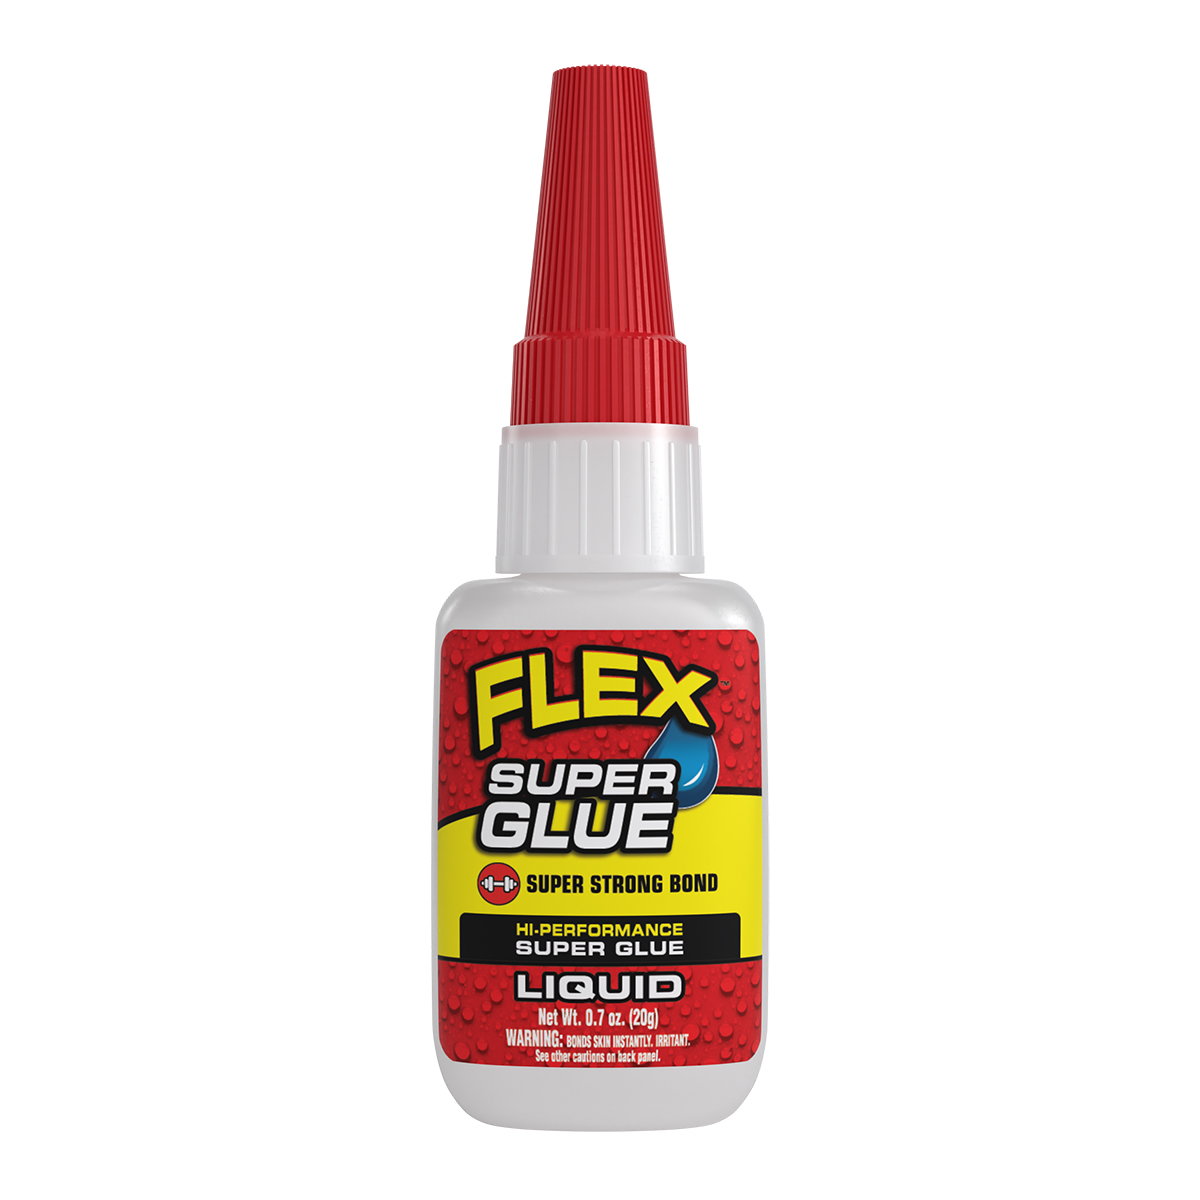 Flex Seal Flex Super Glue Liquid SGLIQB20 - High-Strength Water-Resistant Glue in 20g Bottle for DIY Crafts Emergency Repairs - 